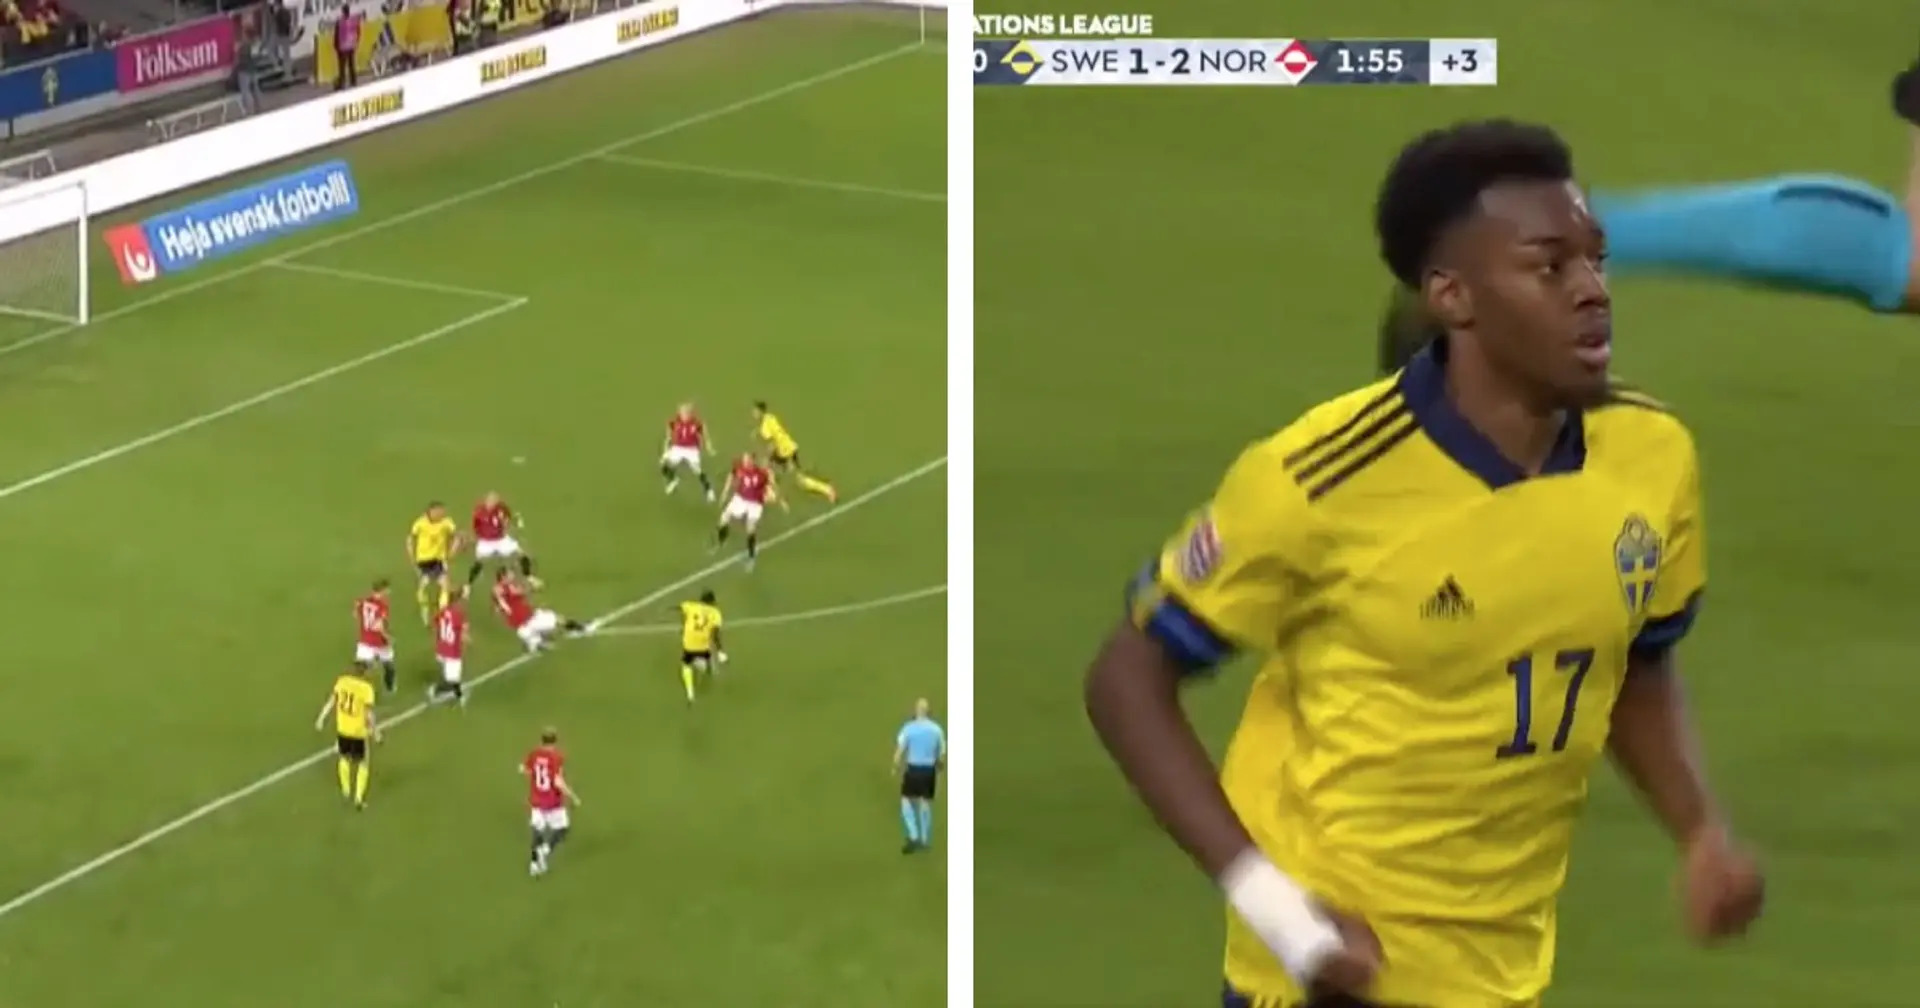 Elanga scores beautiful long-range screamer to register first goal for Sweden national team (video)